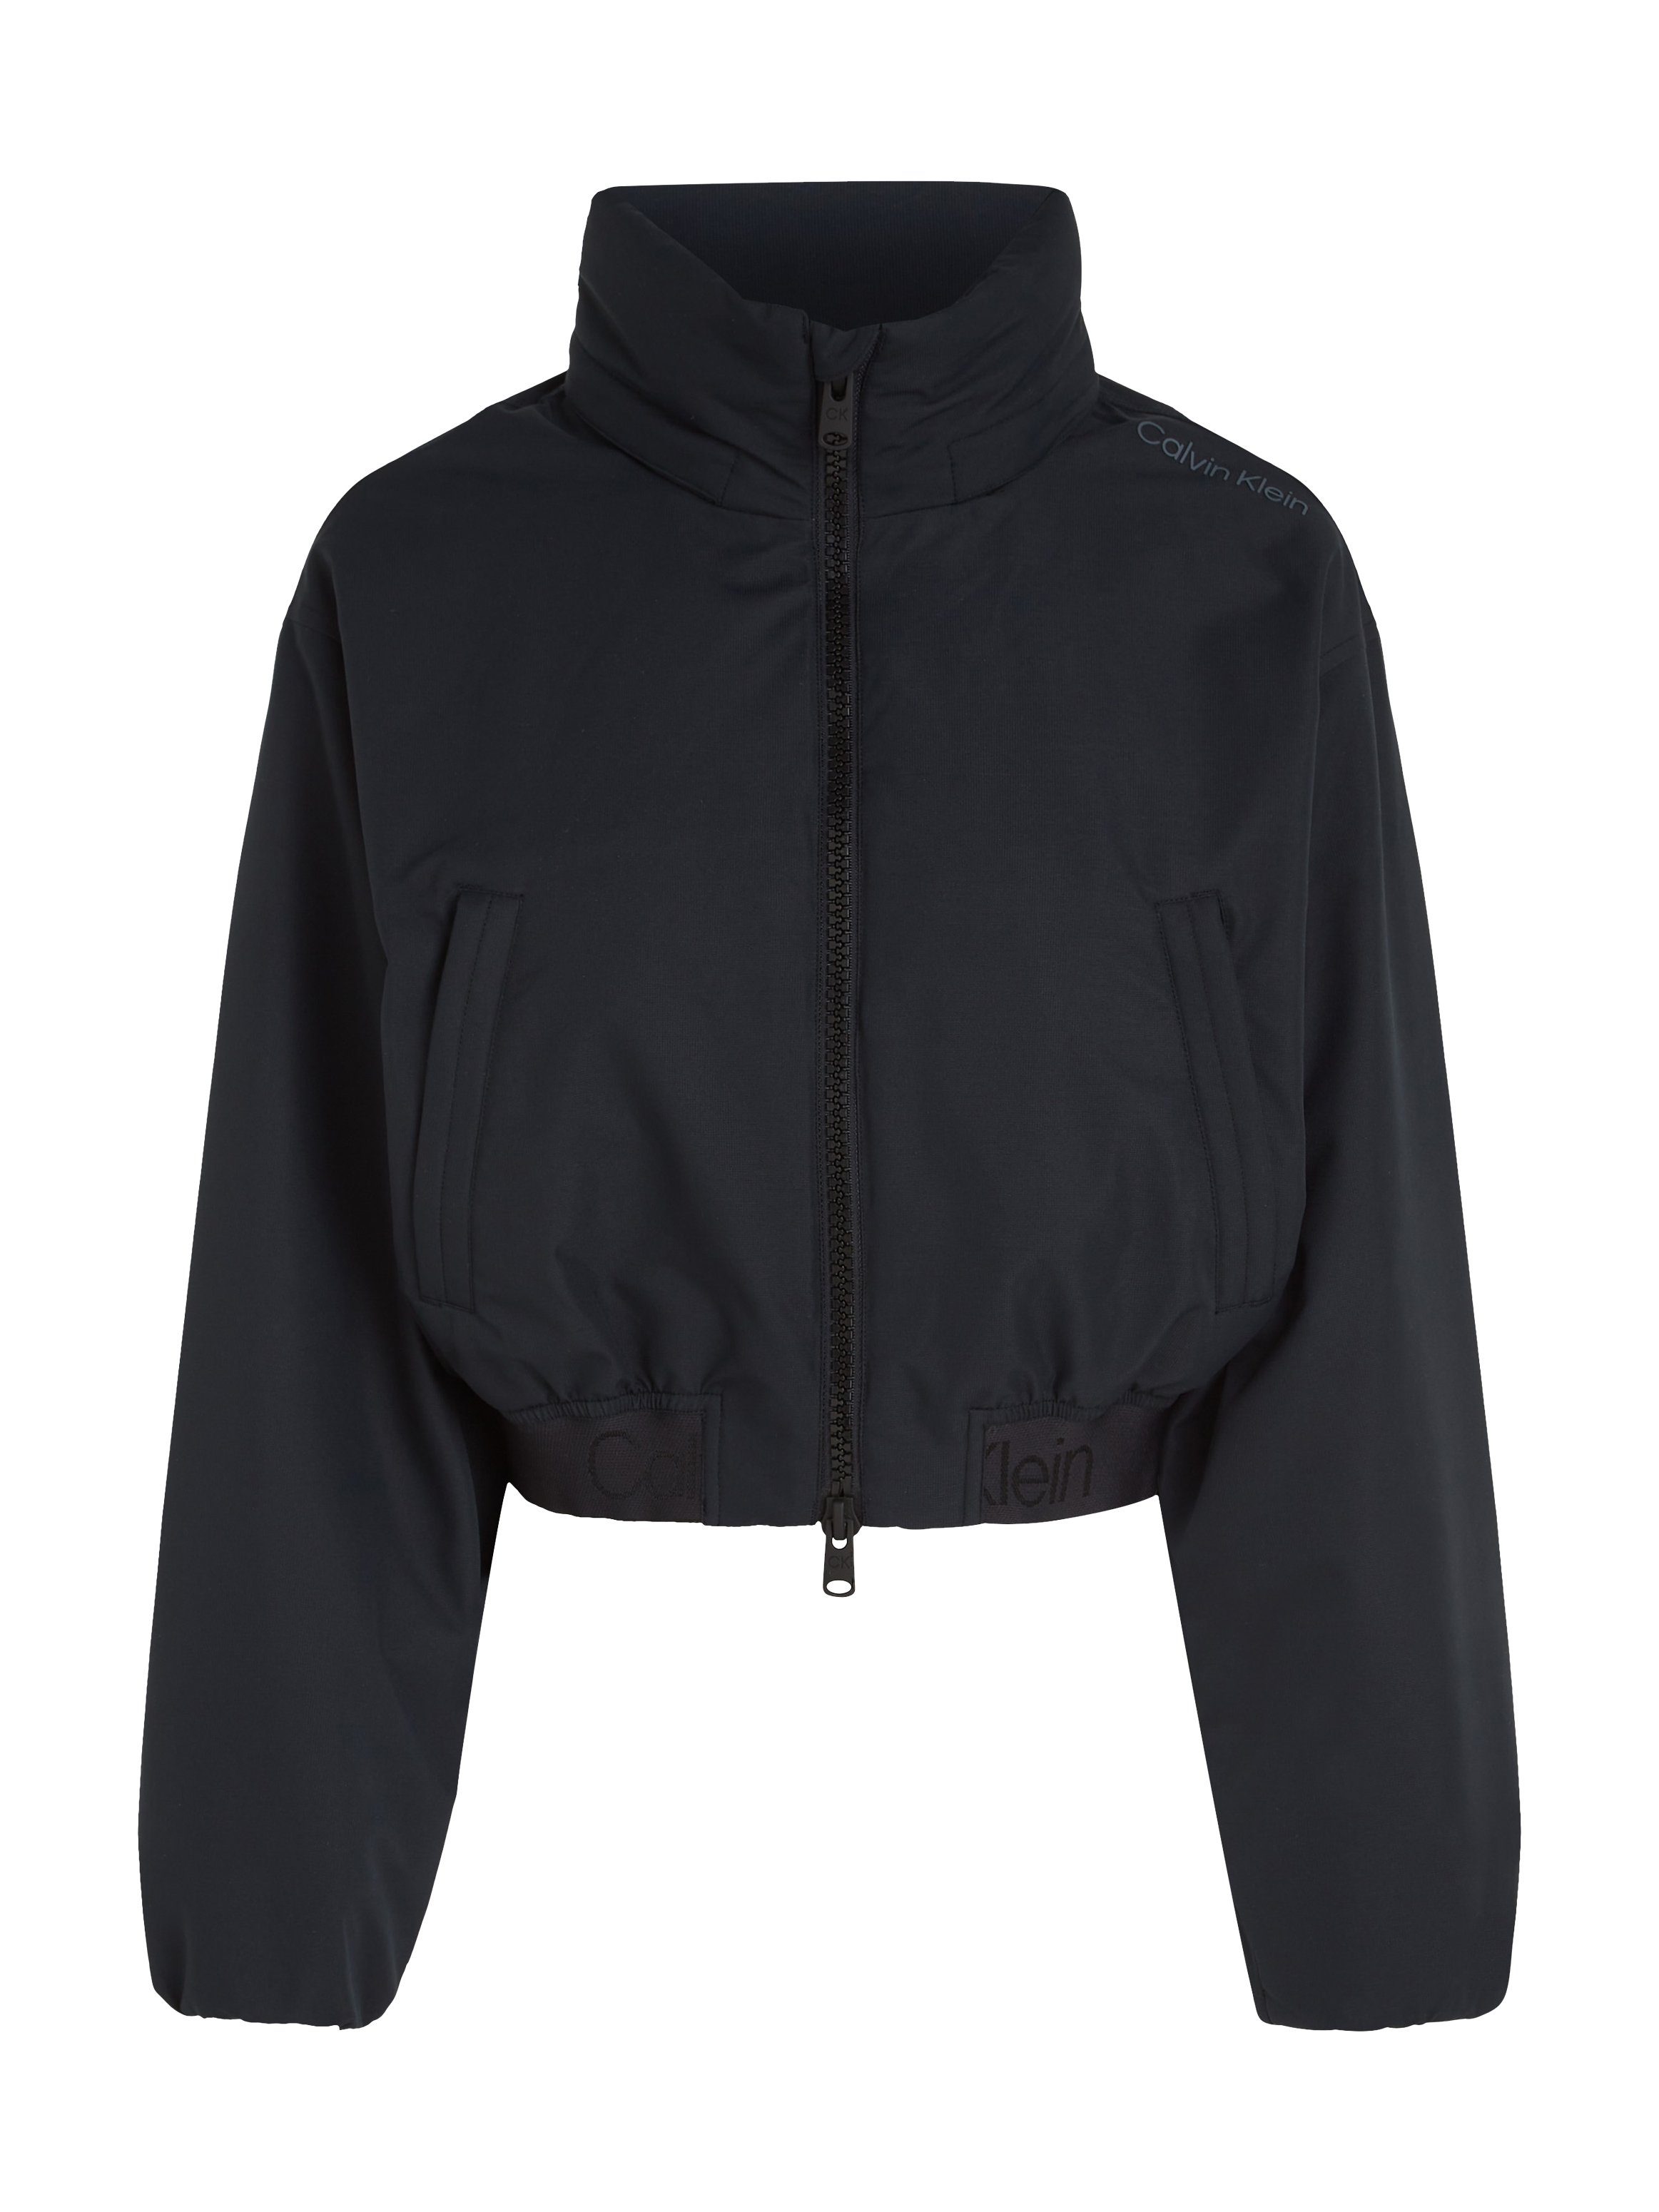 Calvin Klein Sport Outdoorjacke Jacket Padded schwarz - PW